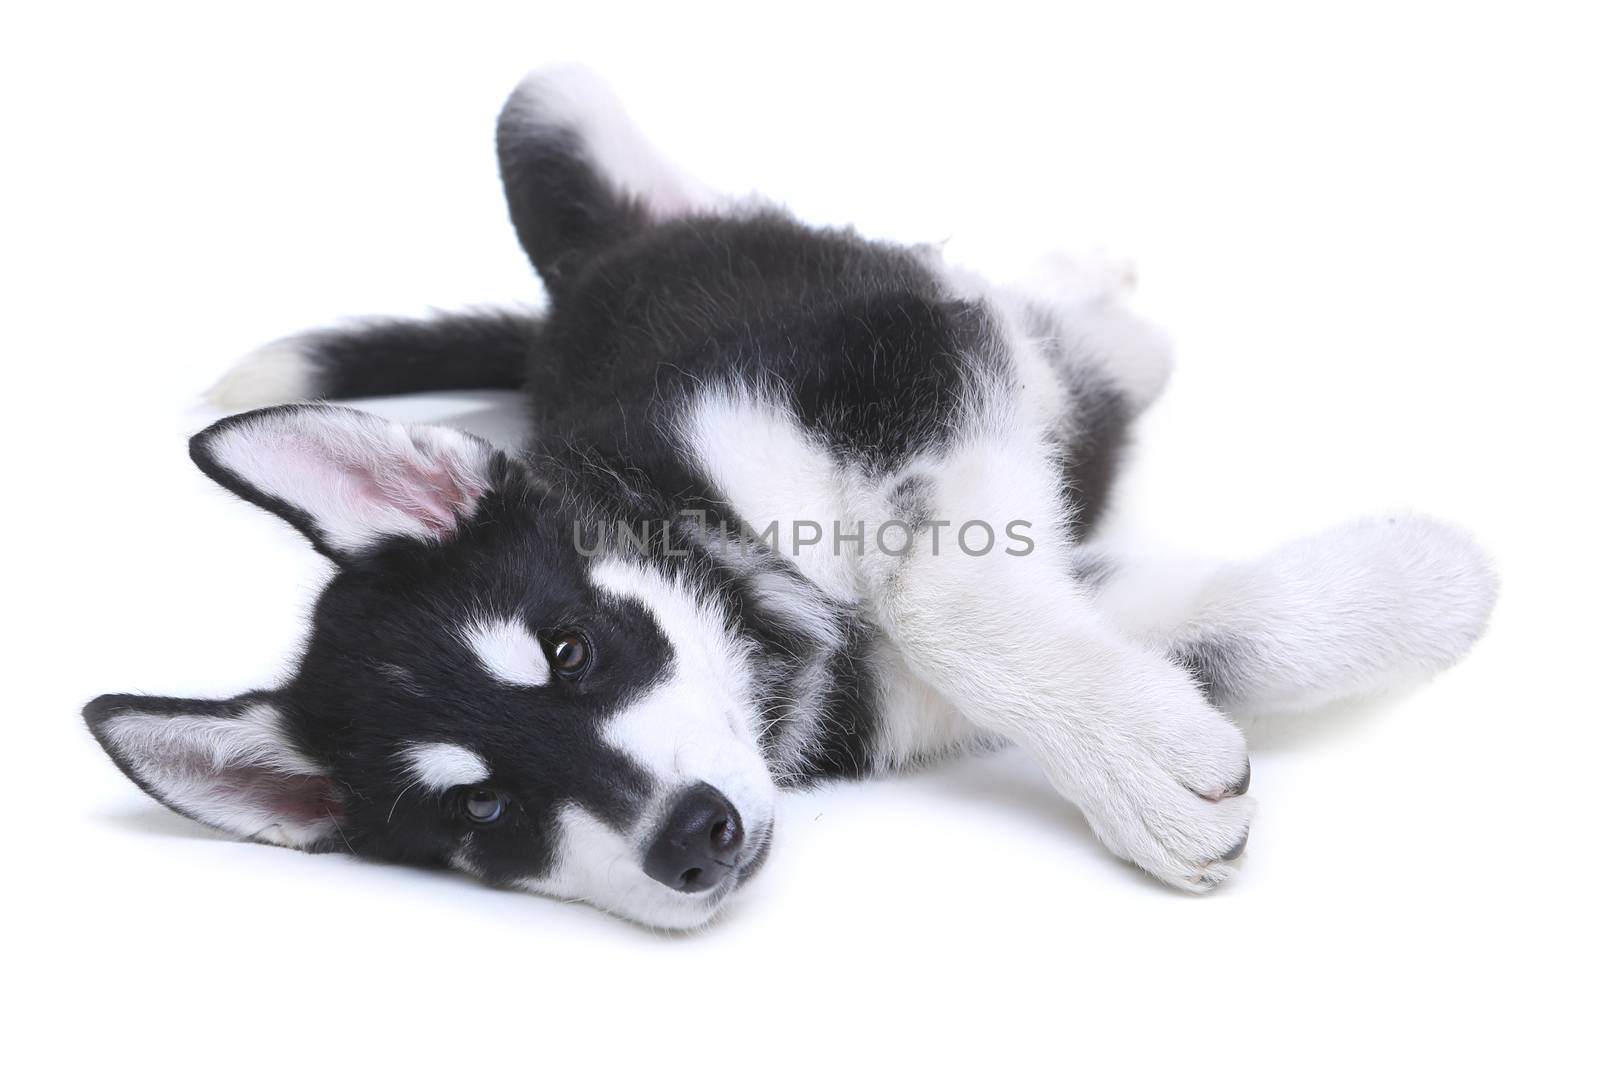 Adorable Alaskan Malamute Puppy on White Background in Studio